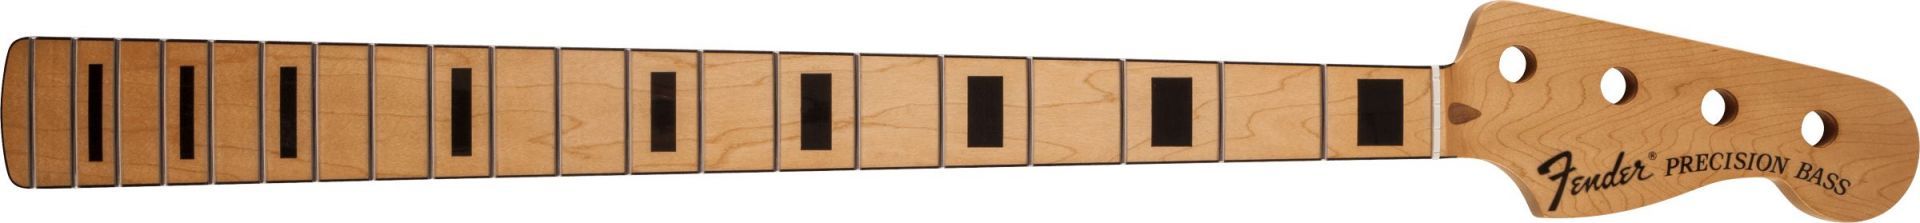 Fender Classic Series 70s Precision Bass Neck 20 Medium Jumbo Frets Block Inlay - Maple Natural